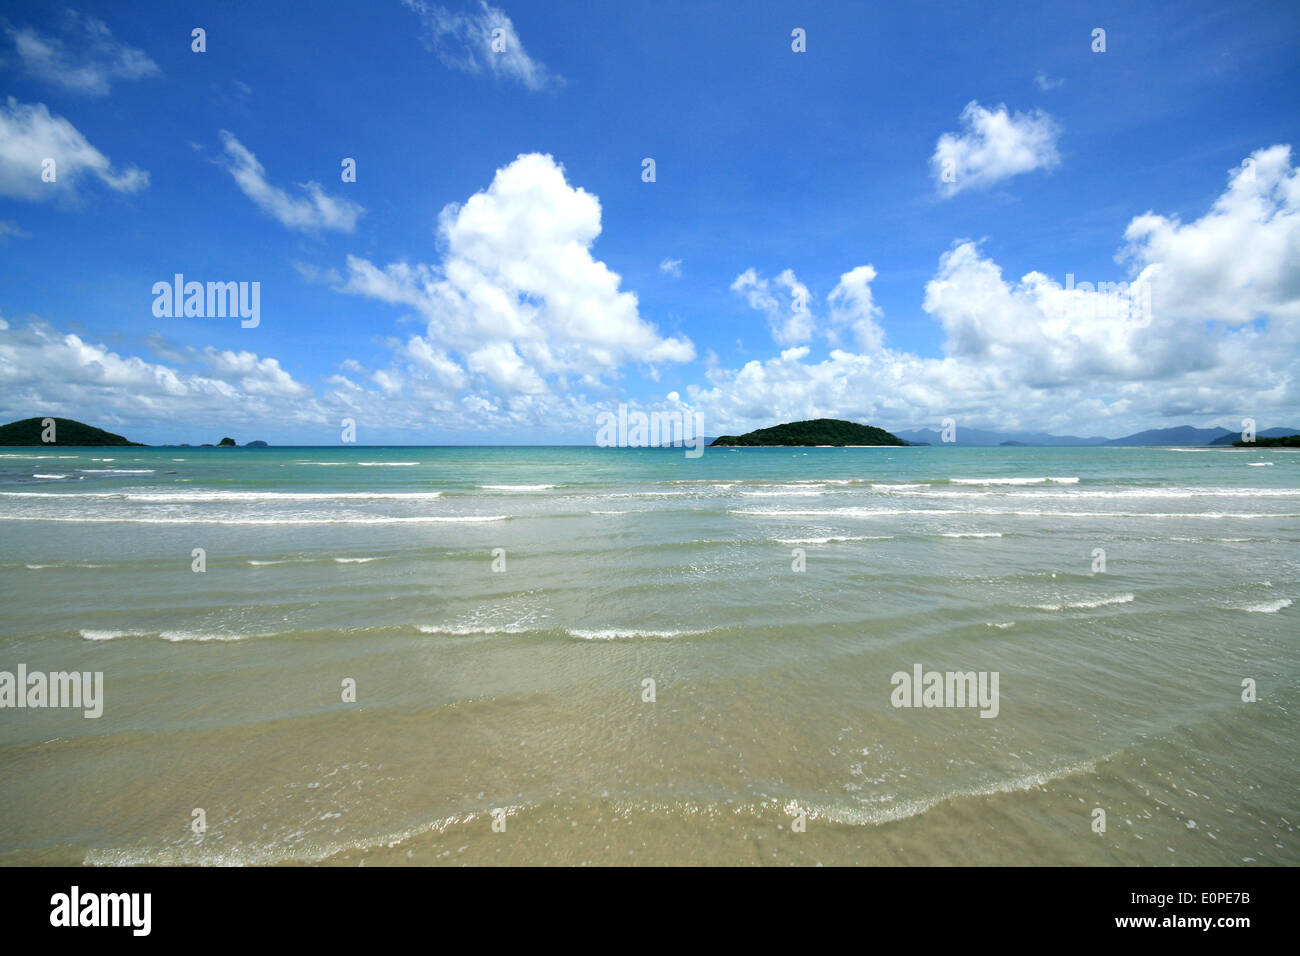 Alluring ocean and blue sky at Koh Maak (Koh Mak), Thailand Stock Photo